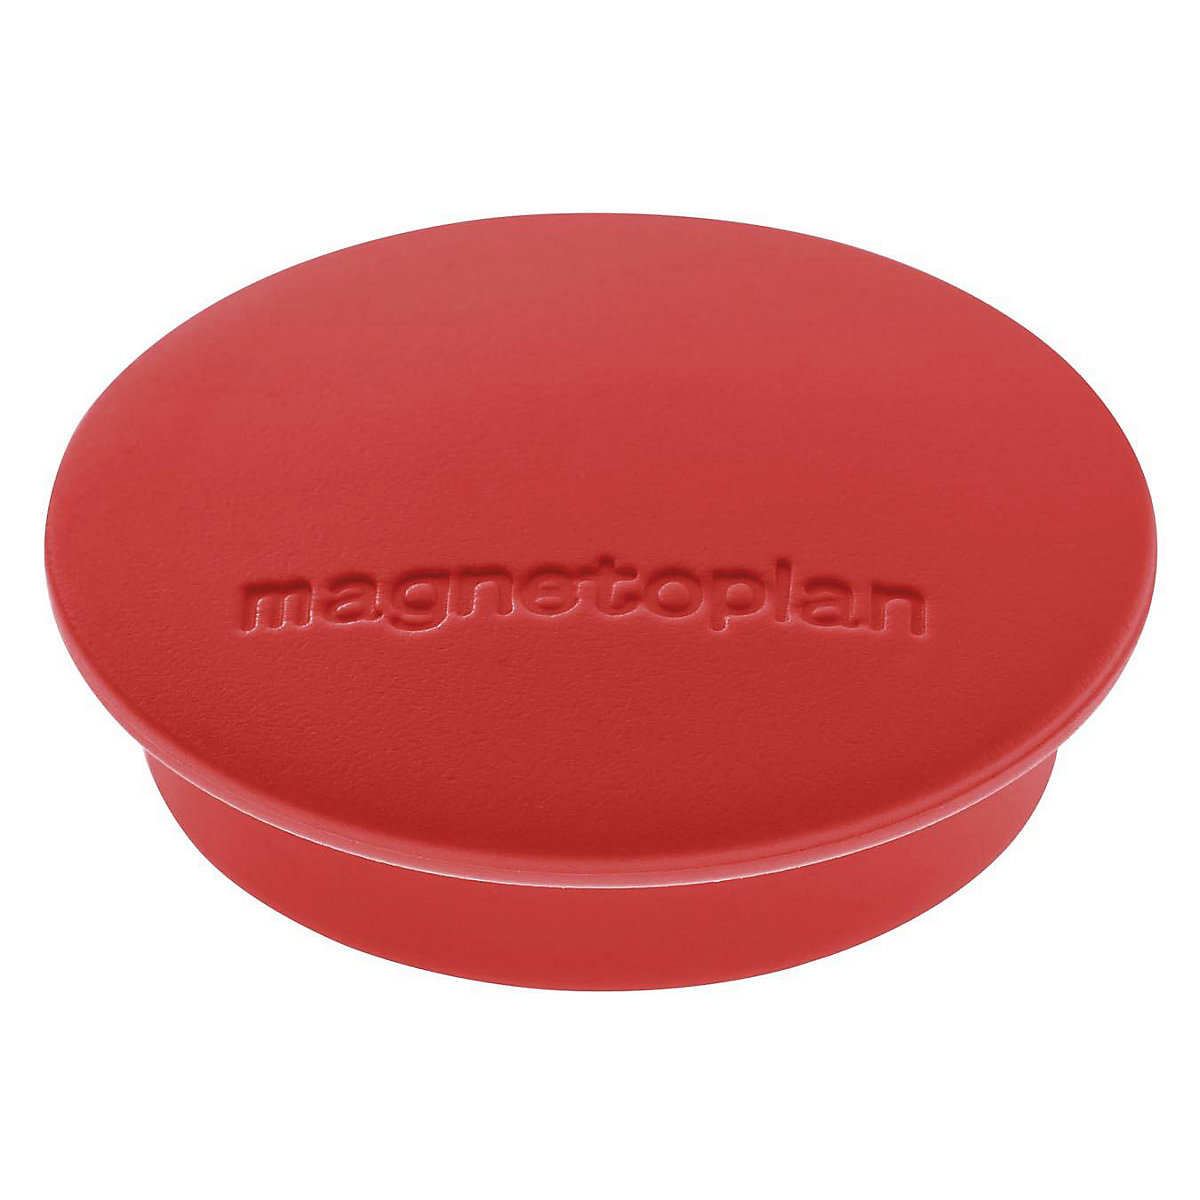 DISCOFIX JUNIOR magnet – magnetoplan, Ø 34 mm, pack of 60, red-2